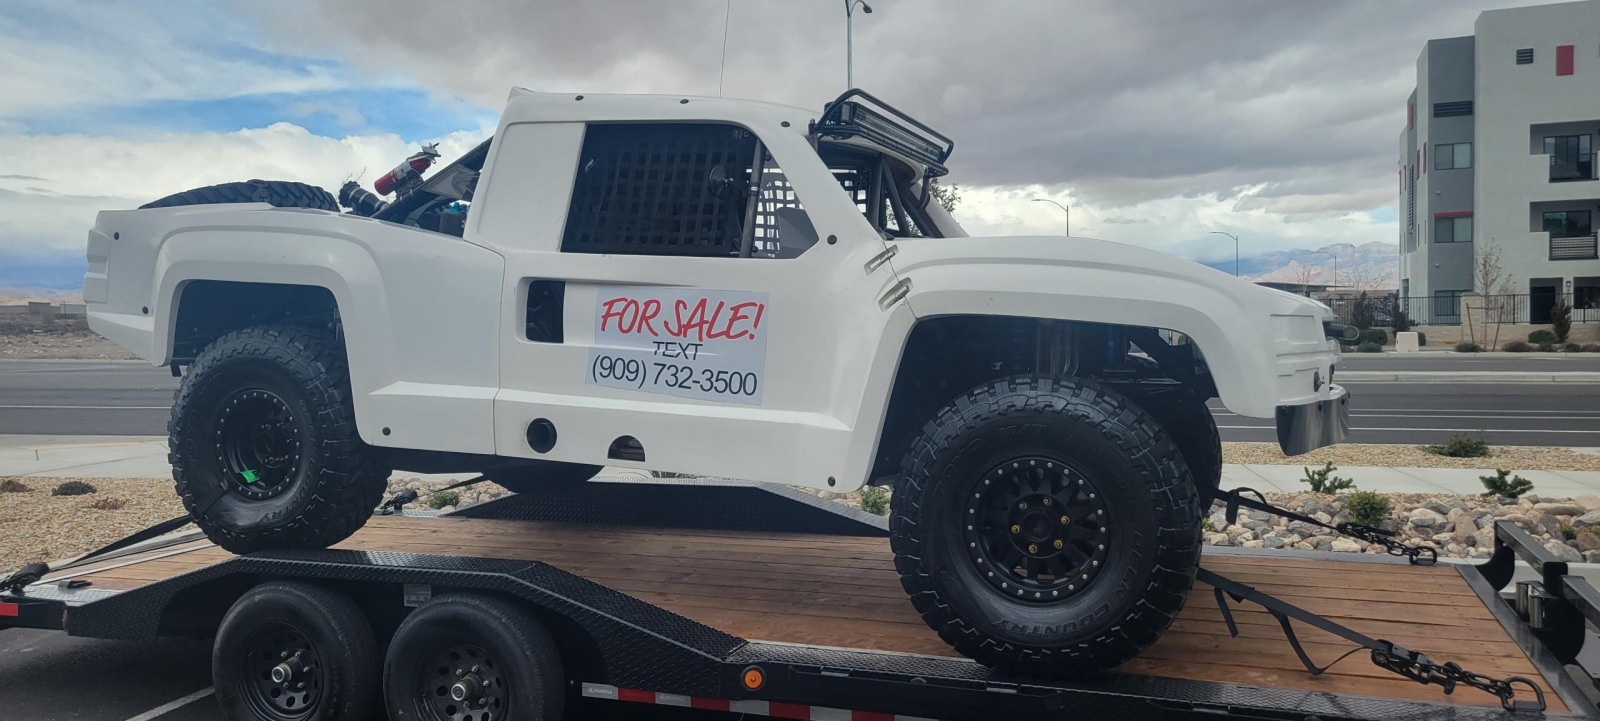 For Sale: Brand New Trophy Truck Ready for San Felipe  - photo1